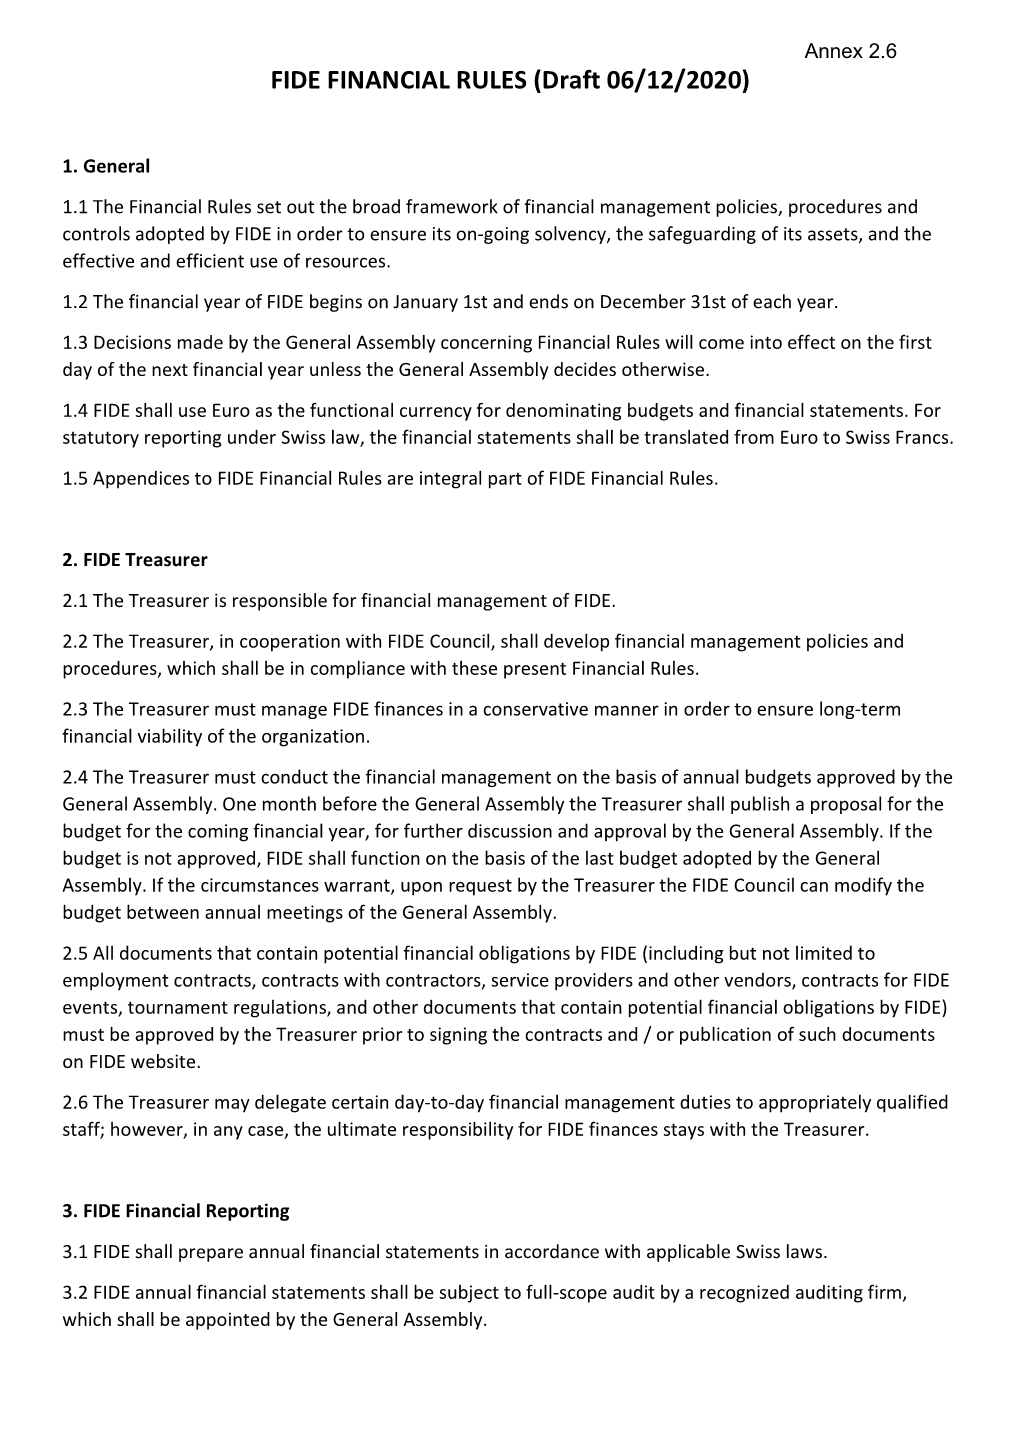 Annex 2.6 FIDE FINANCIAL RULES (Draft 06/12/2020)